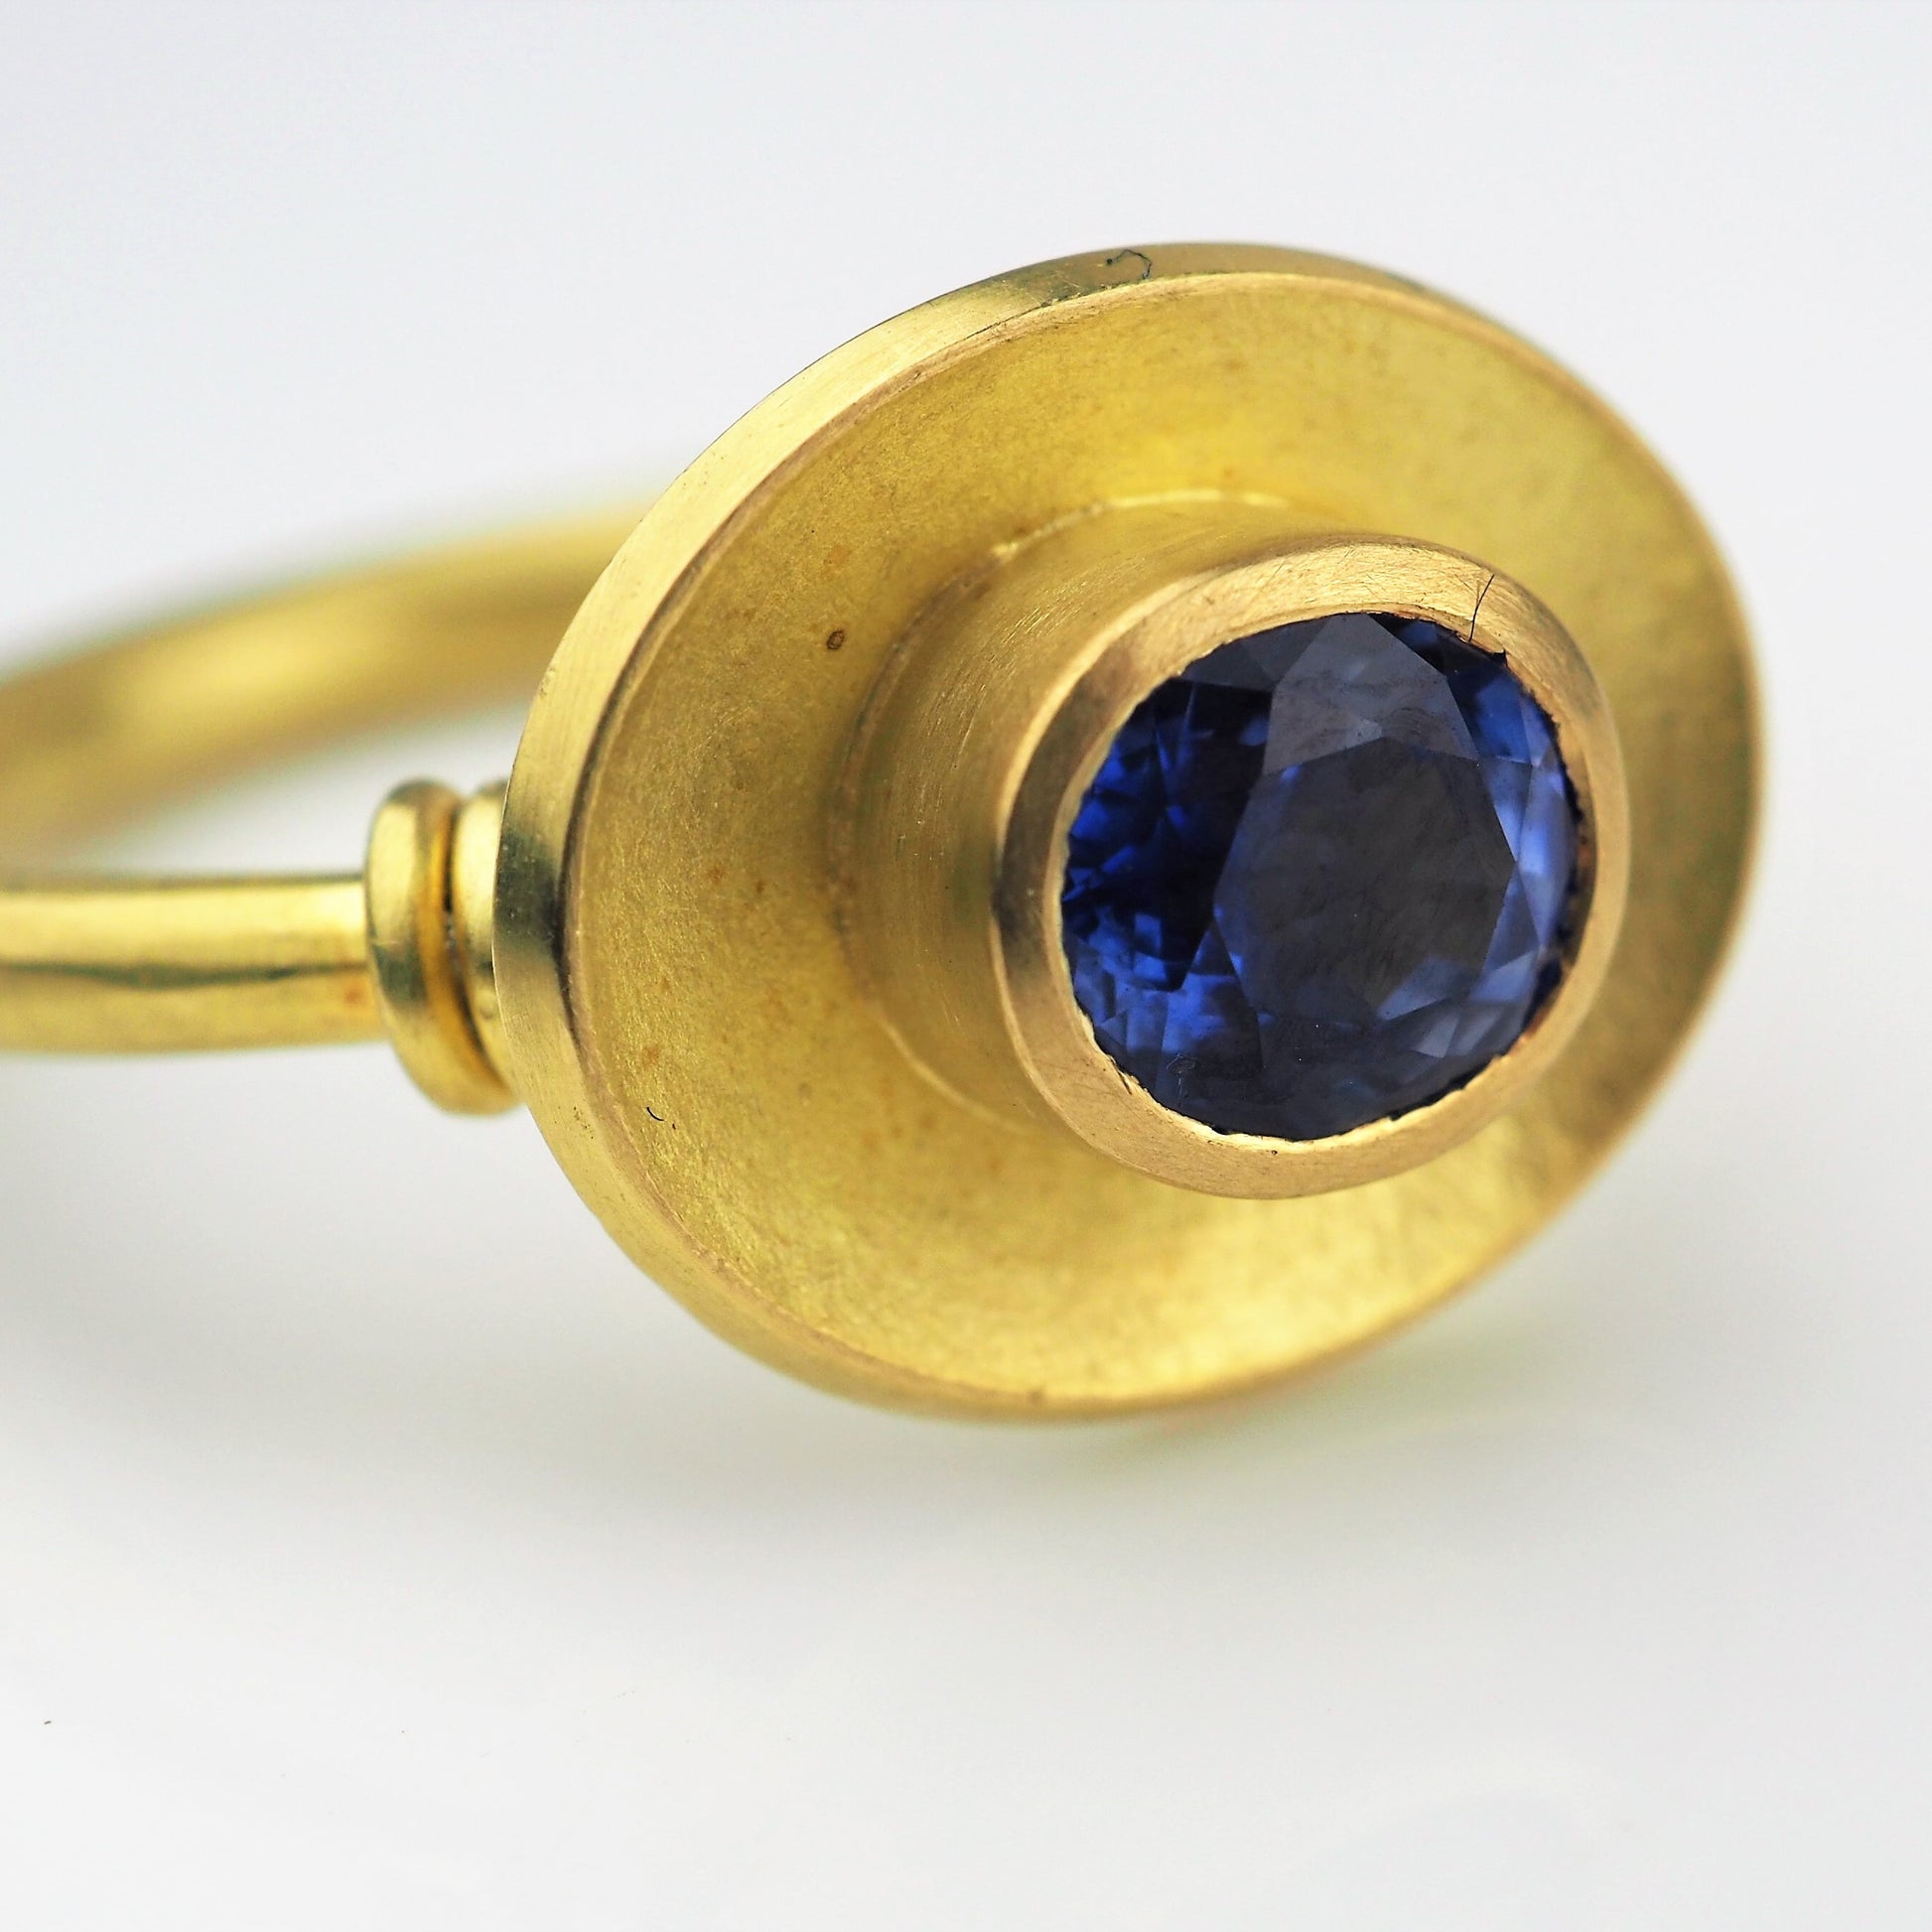 Scott-Moncrieff, Jean – Gold and Sapphire Ring | Jean Scott Moncrieff | Primavera Gallery